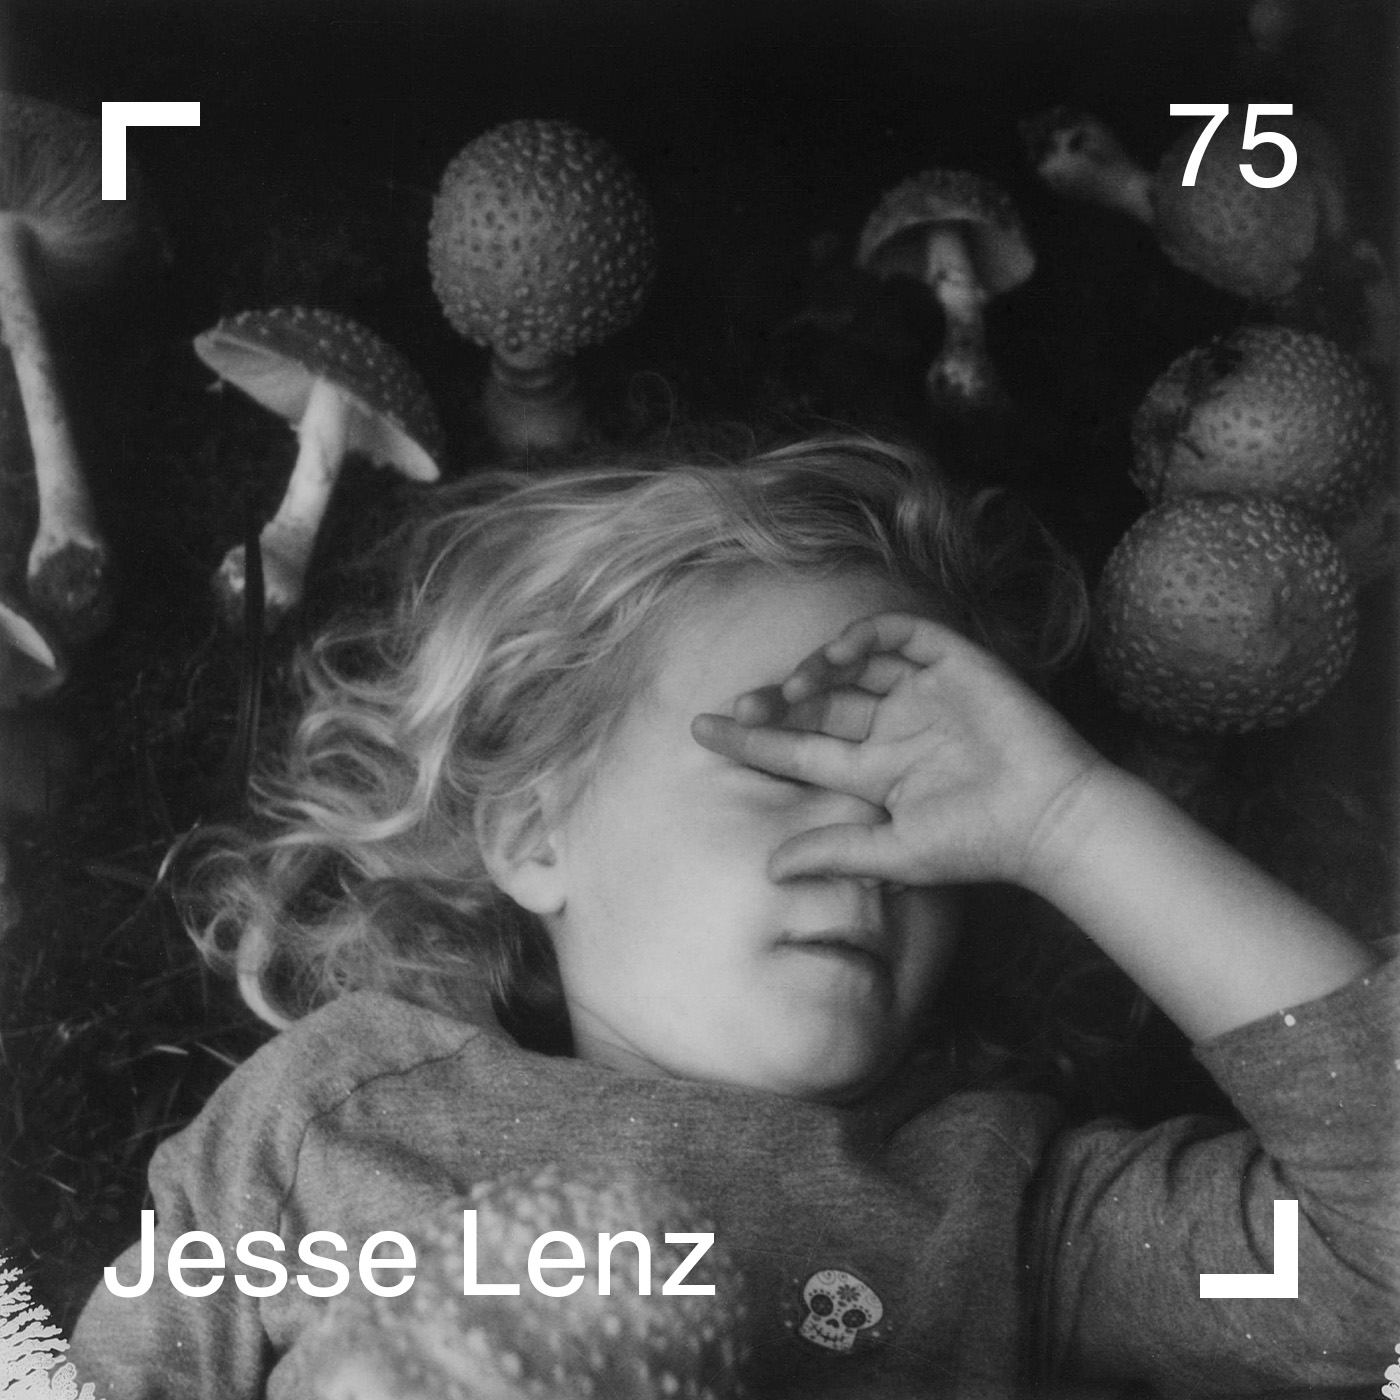 Jesse Lenz